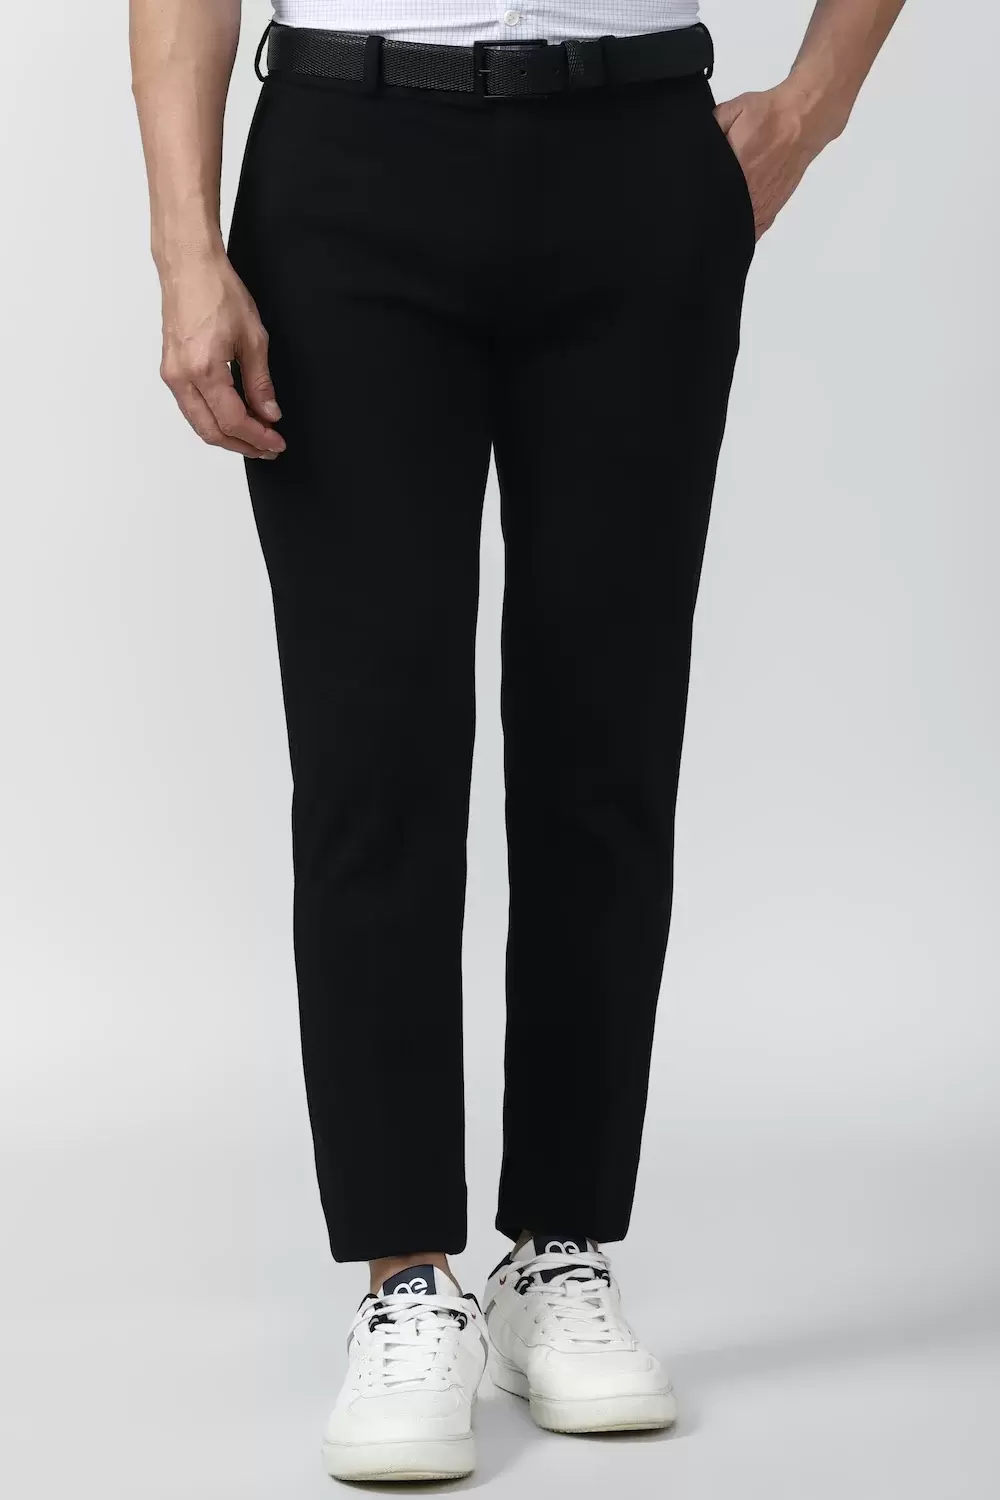 Buy Men Black Solid Regular Fit Trousers Online - 273840 | Peter England